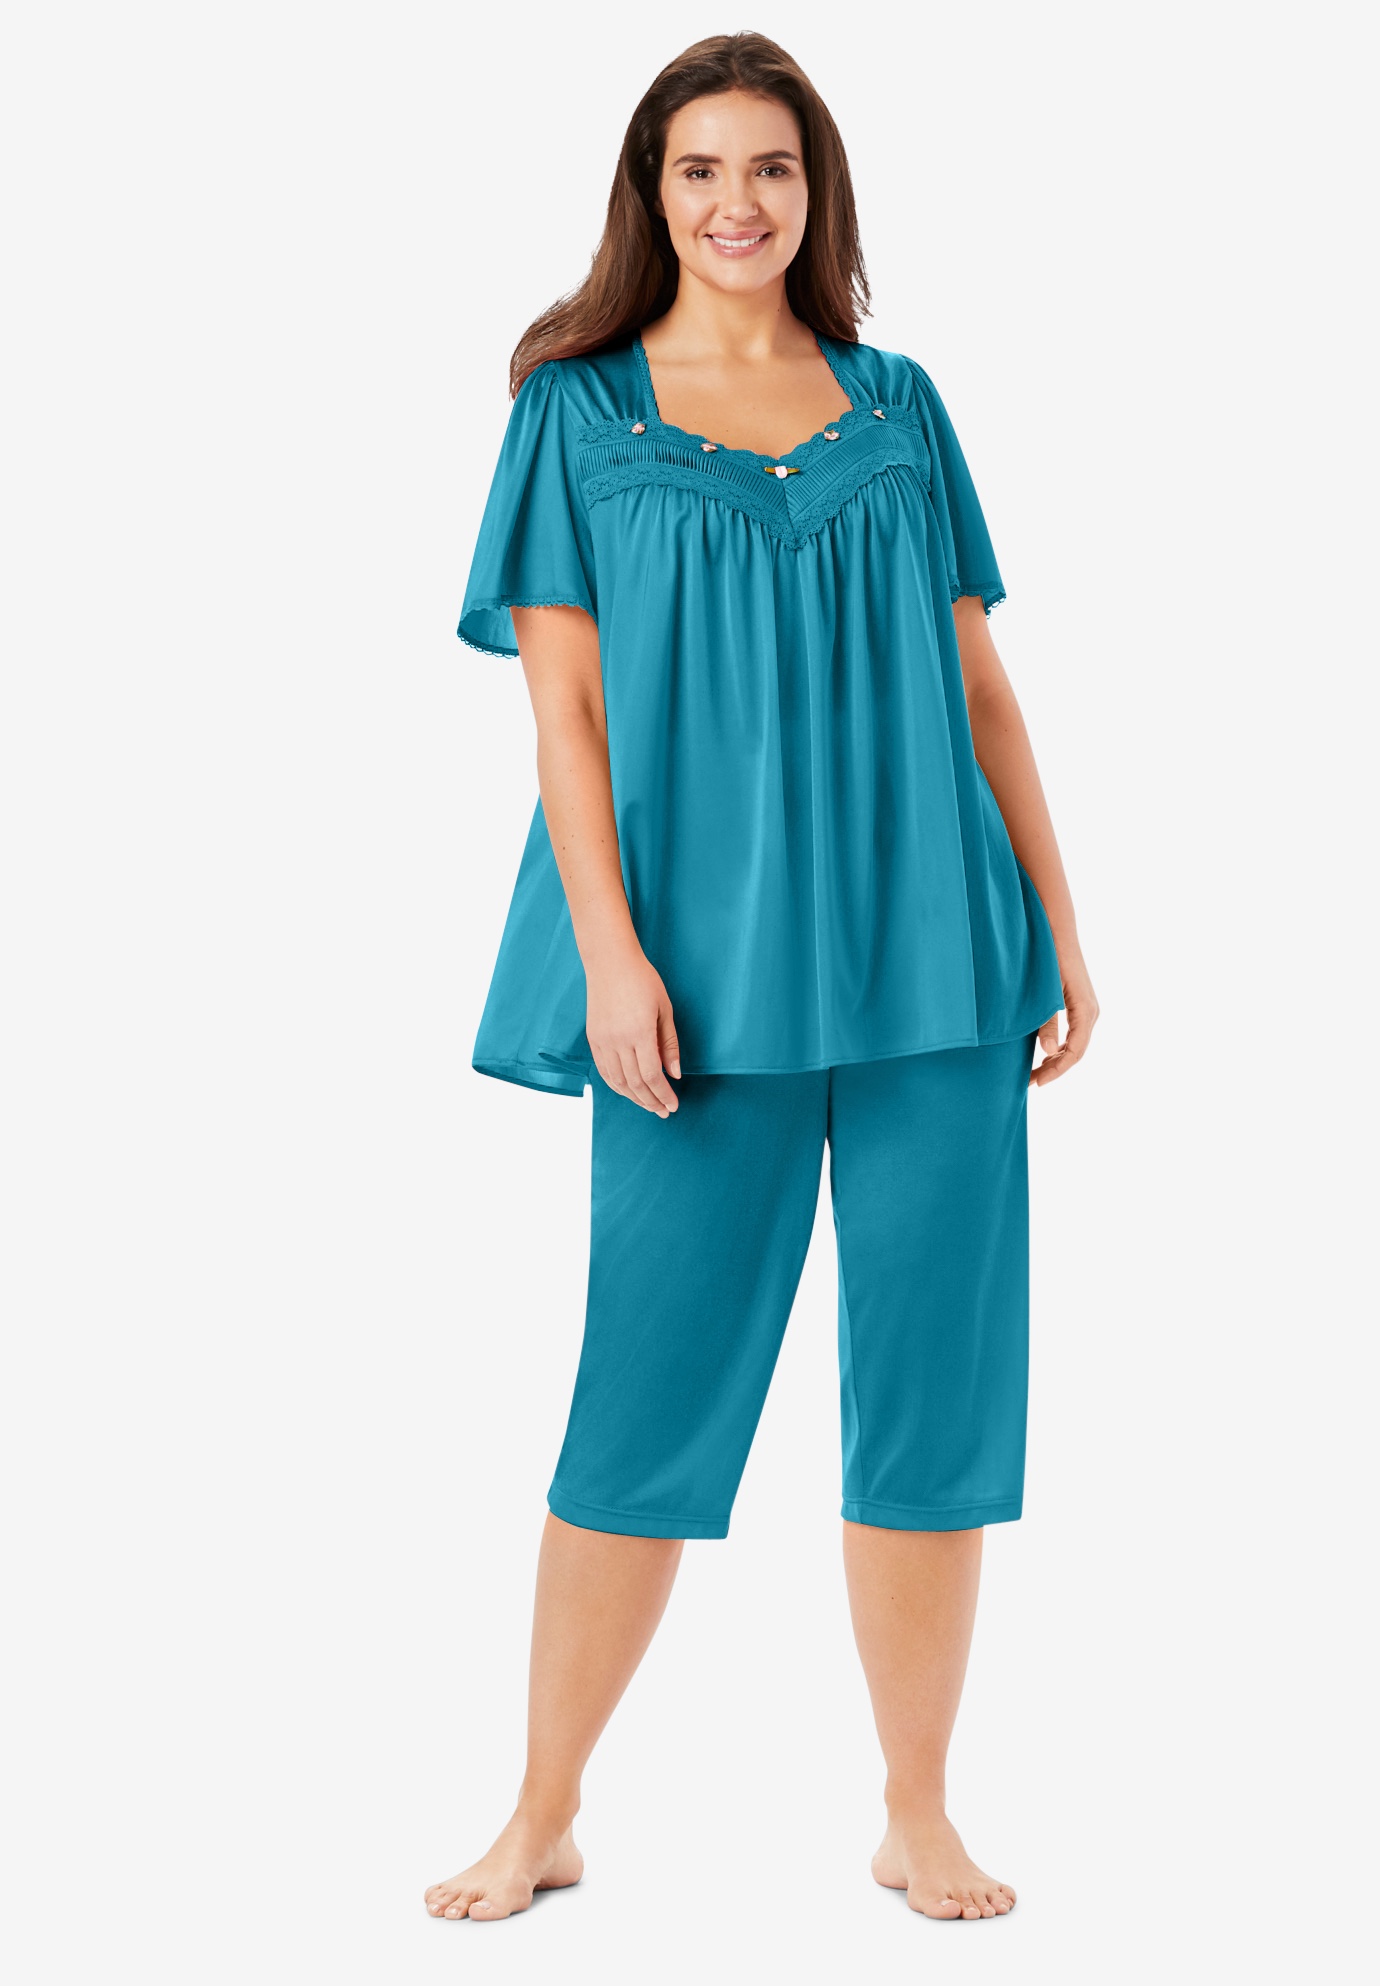 Tricot Pajamas by Dreams & Co.® | Plus SizePajama Sets | Woman Within